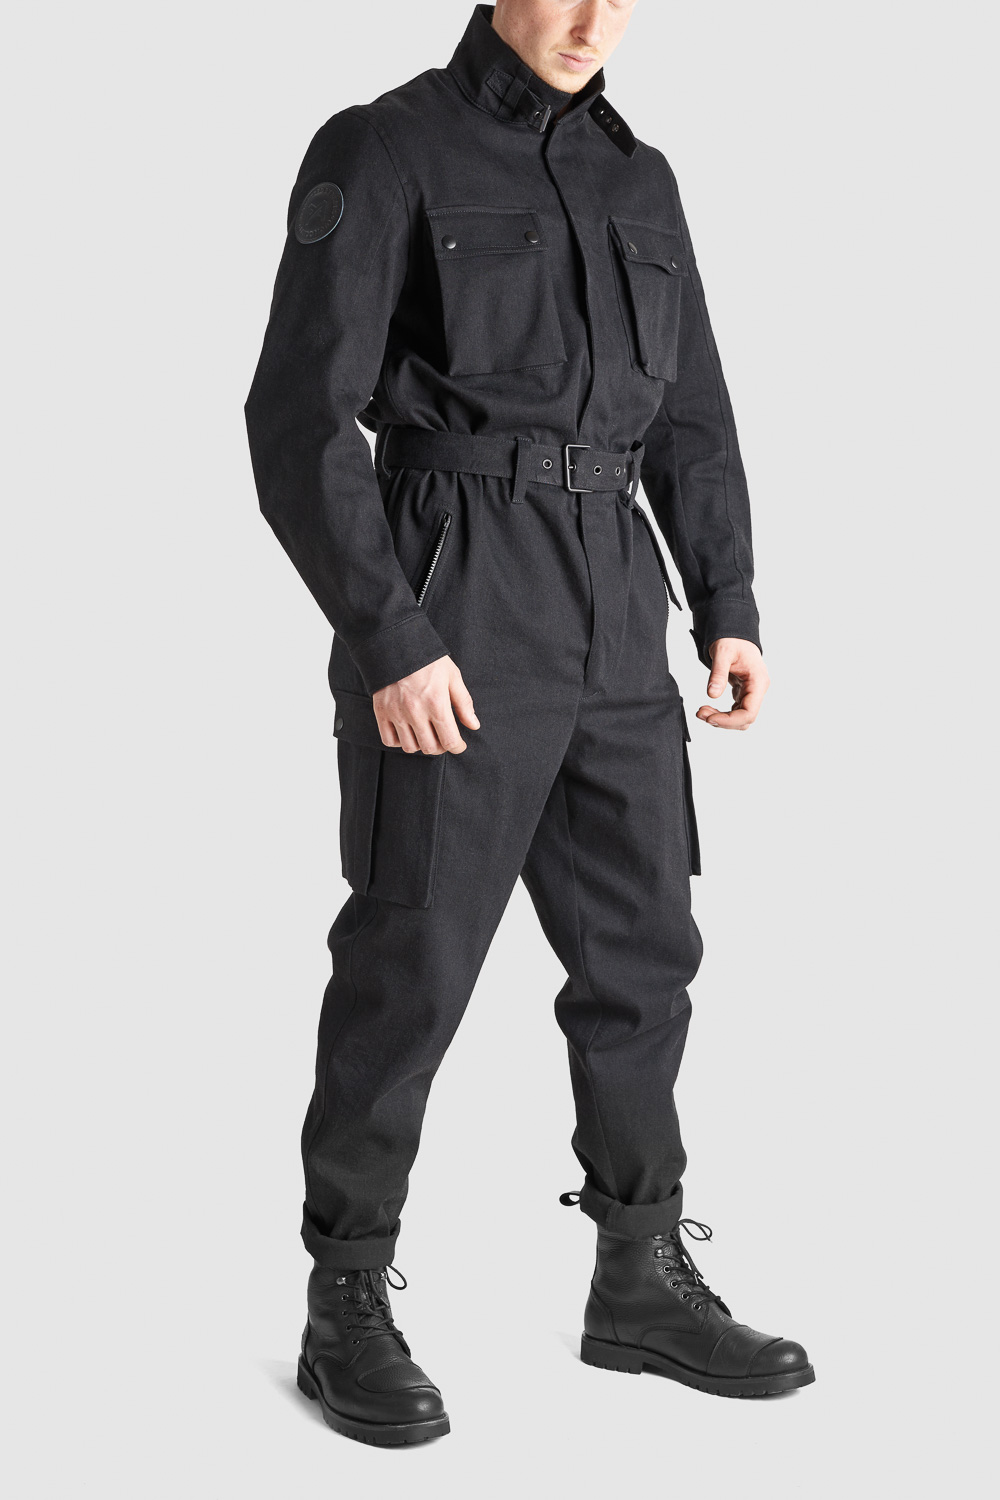 BRAT SUIT BLACK - One-Piece Overall Suit From Comfort-Stretch CORDURA® Denim 1